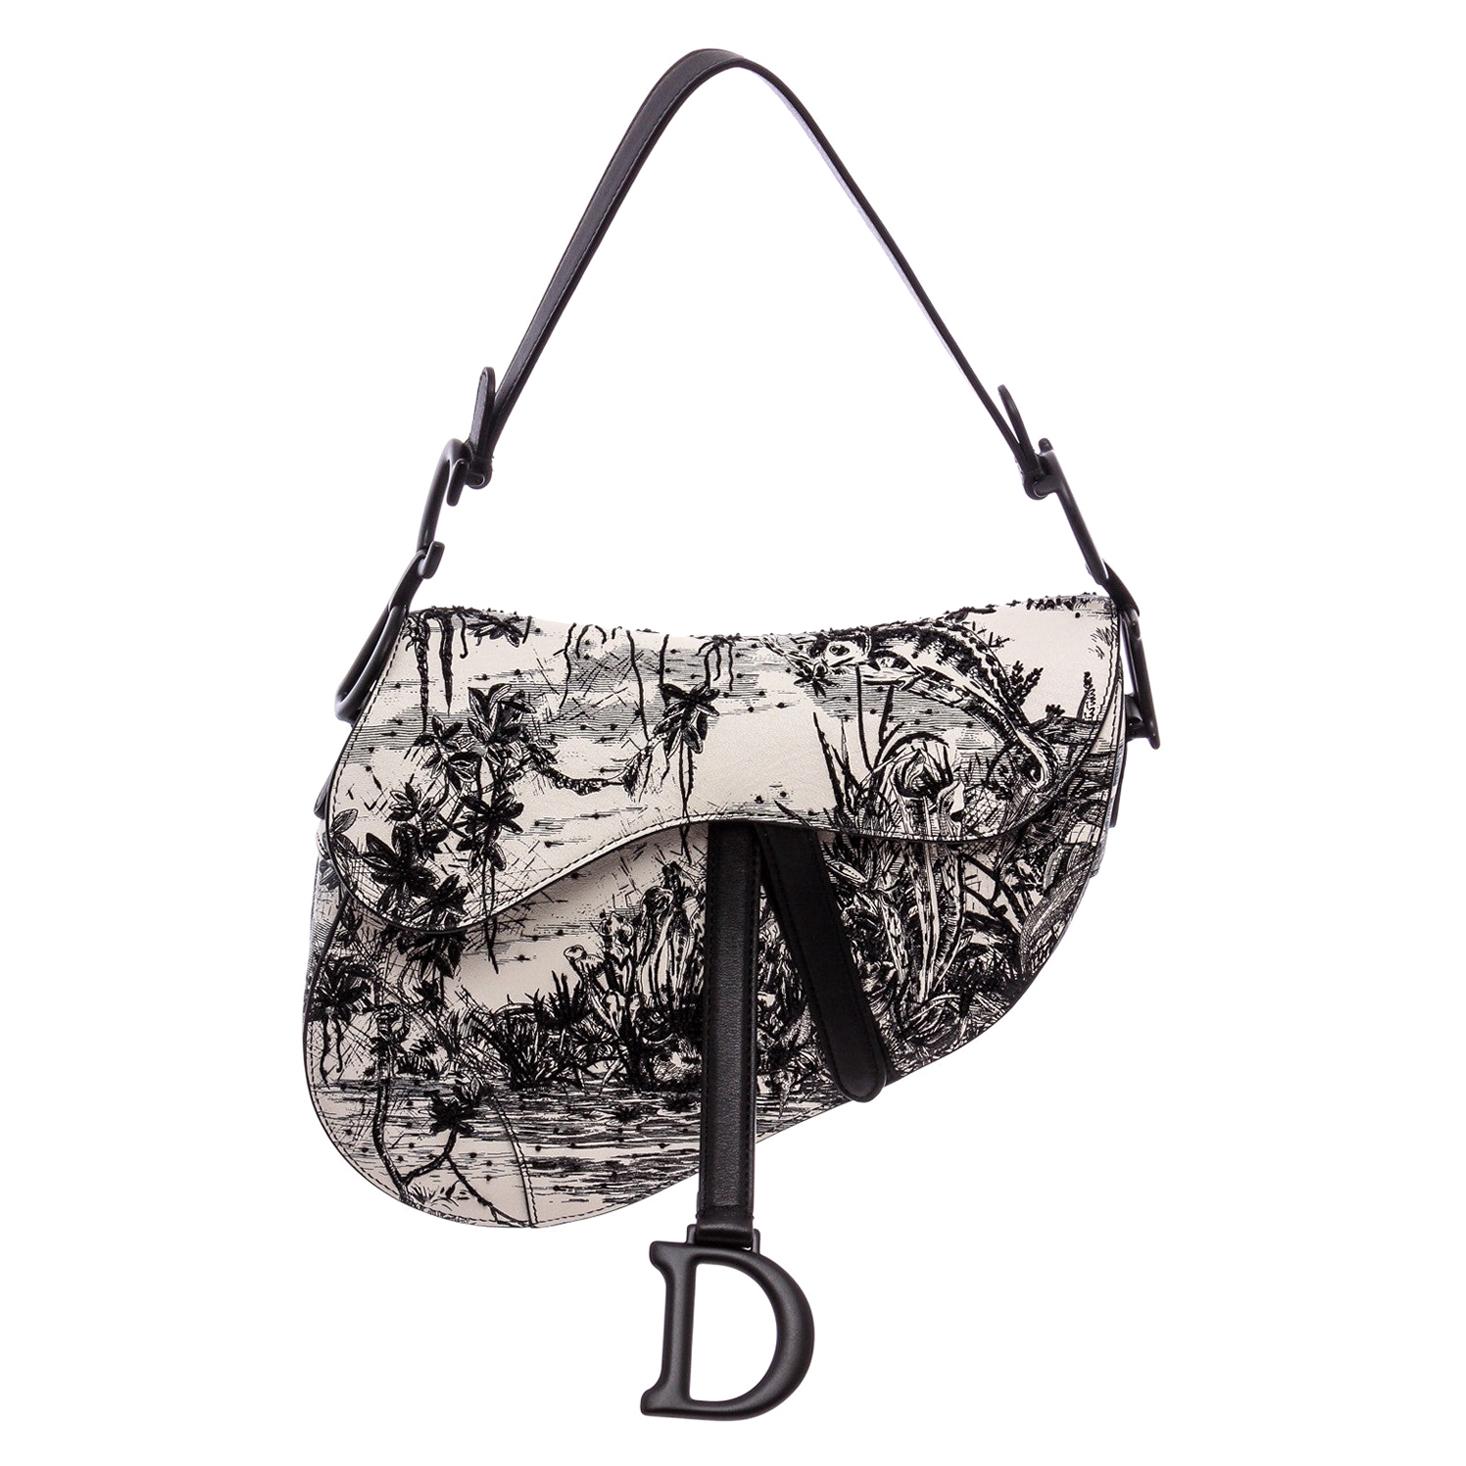 Christian Dior Black White Embroidered Leather Medium Saddle Bag